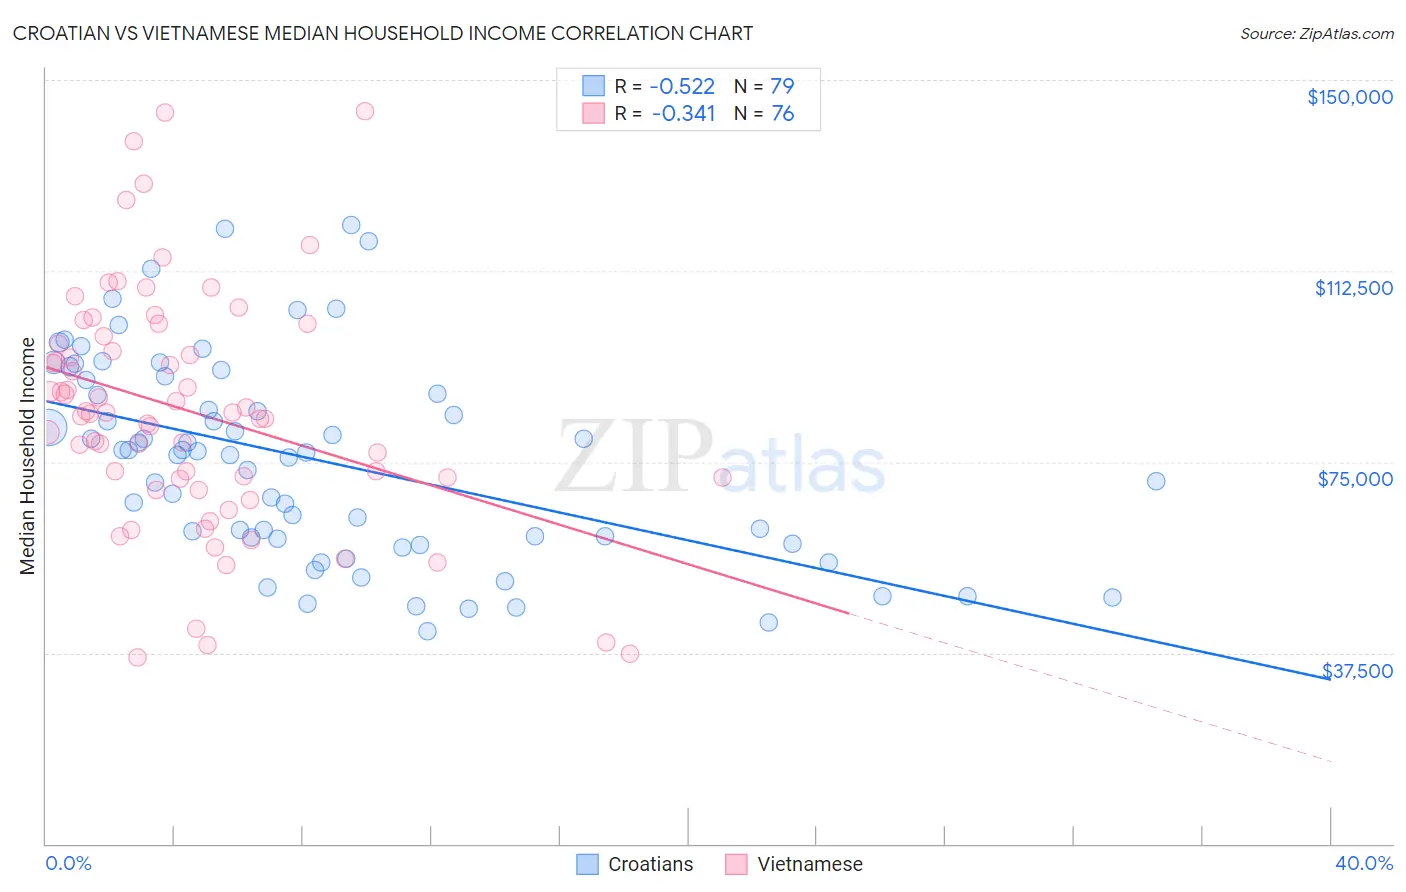 Croatian vs Vietnamese Median Household Income